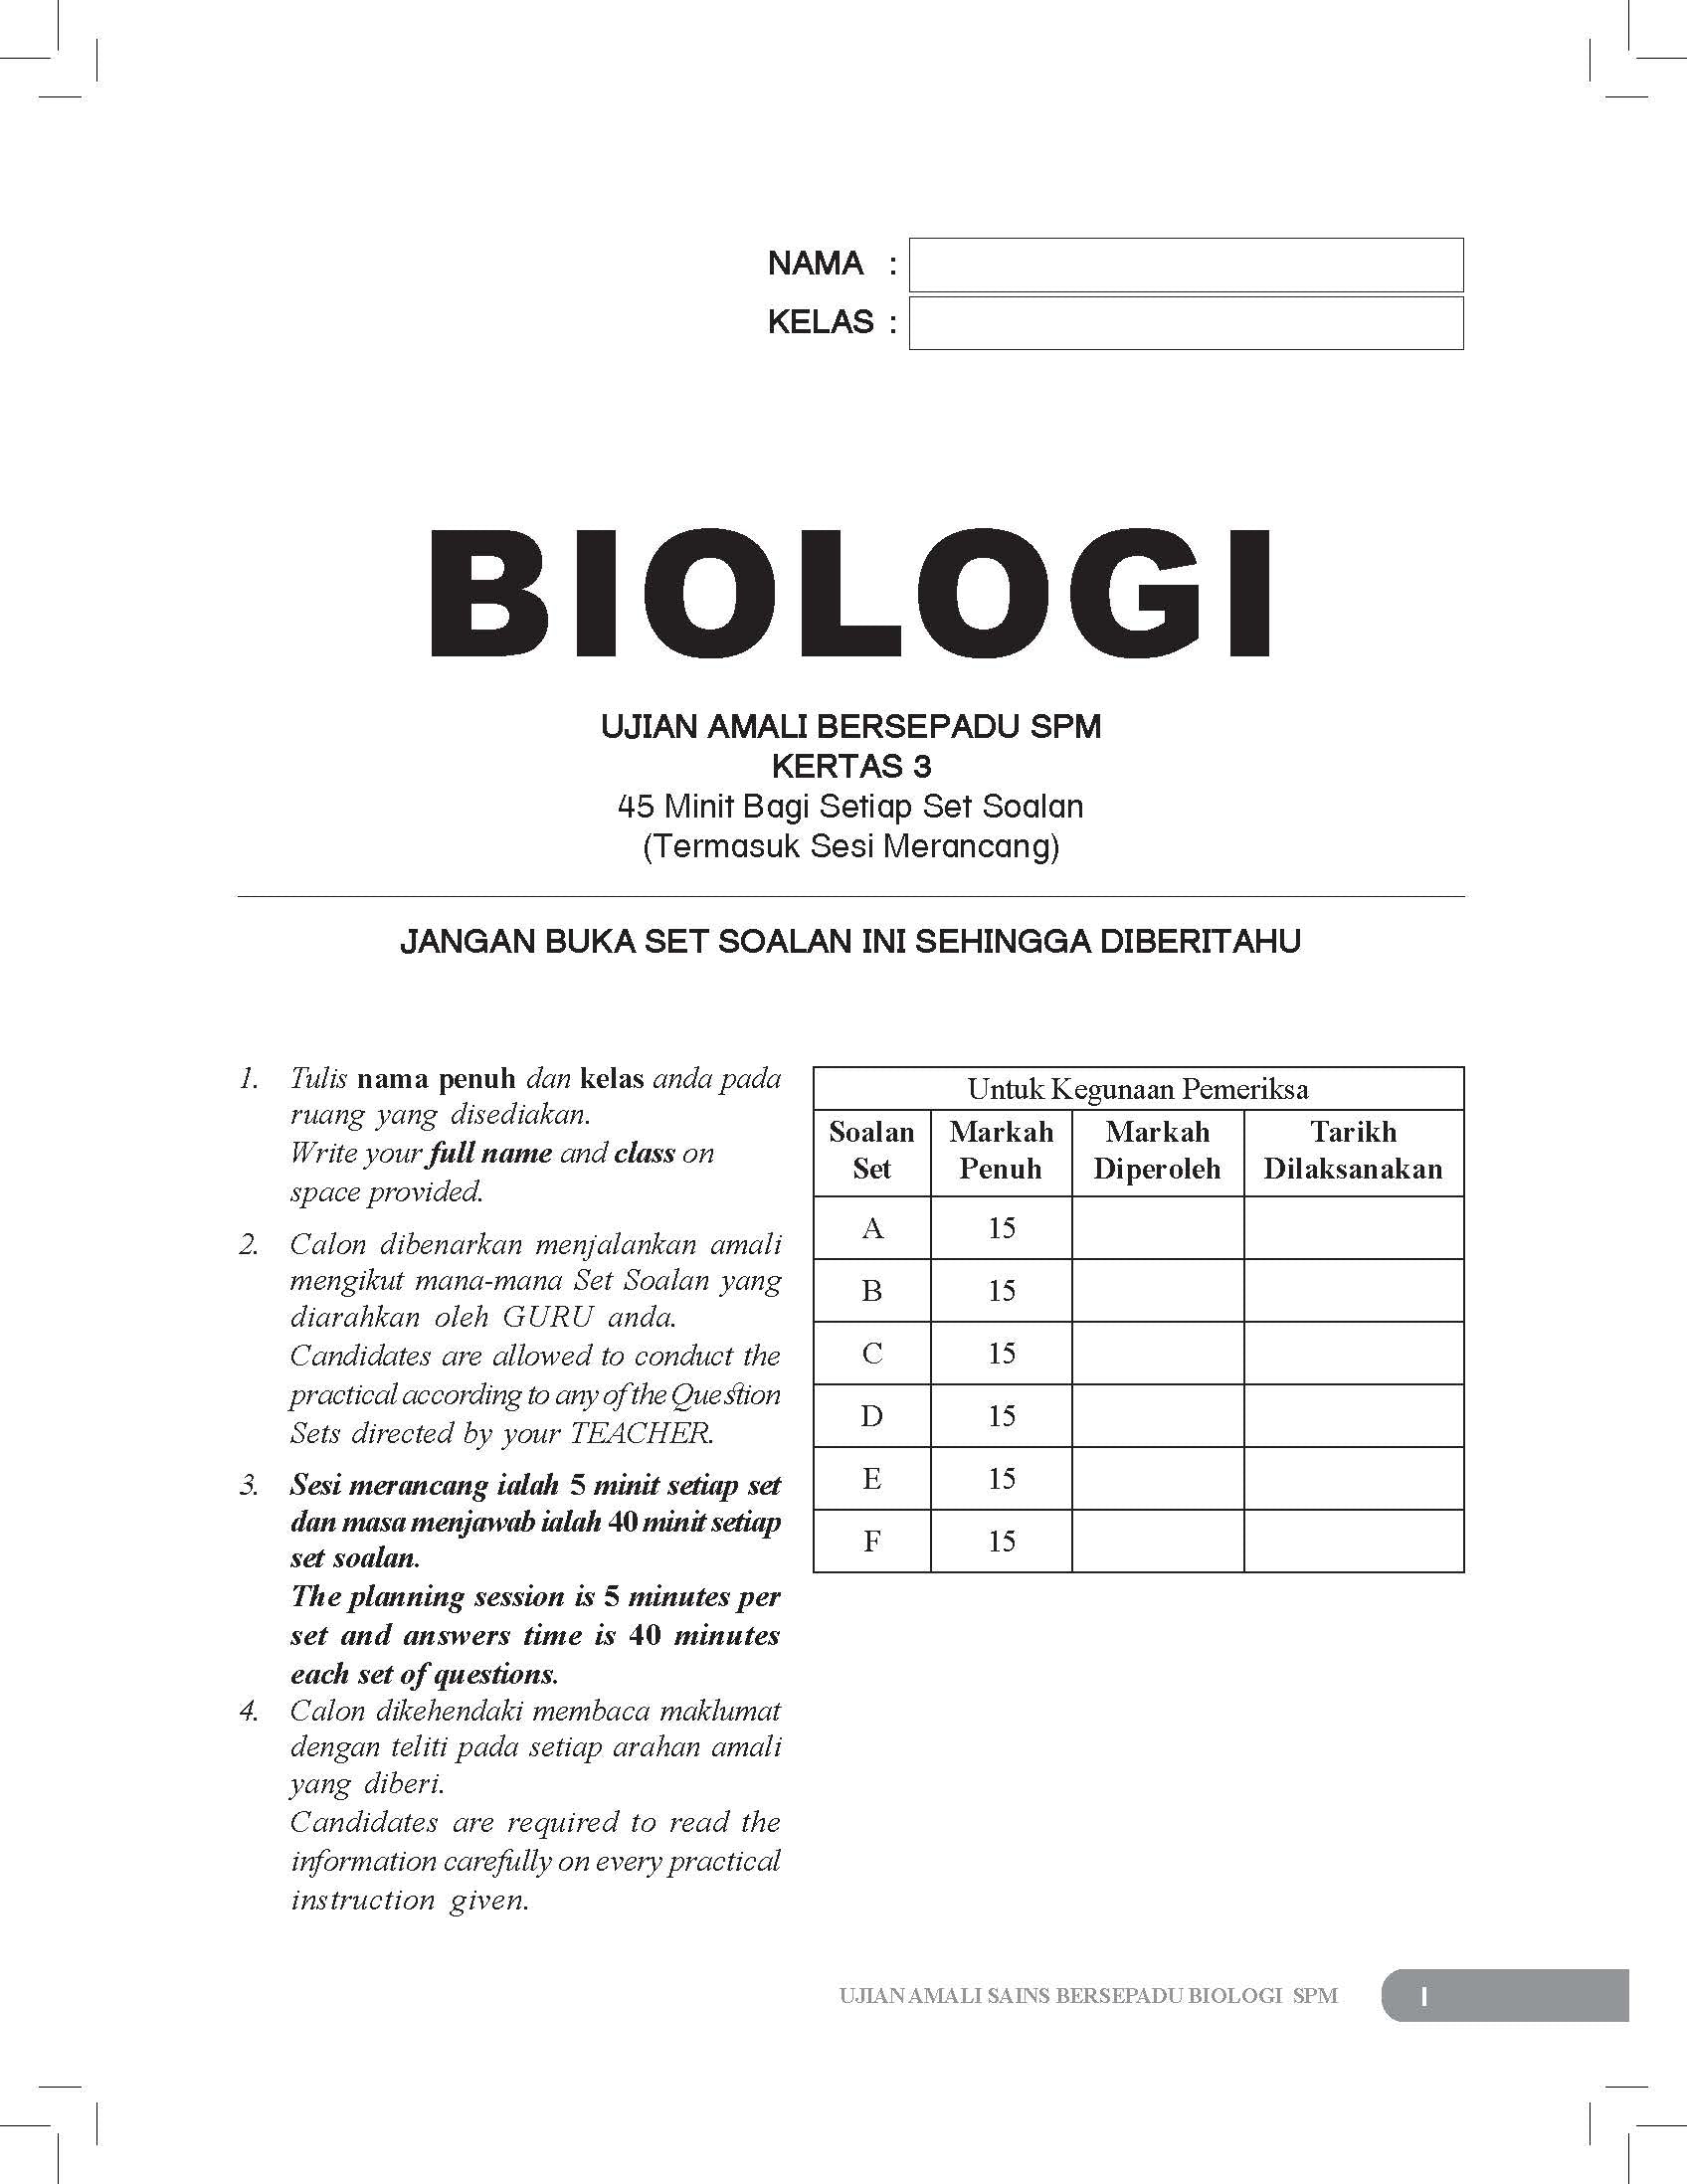 Conquer A+ Ujian Amali Sains Bersepadu Biologi SPM - (TBBS1304)